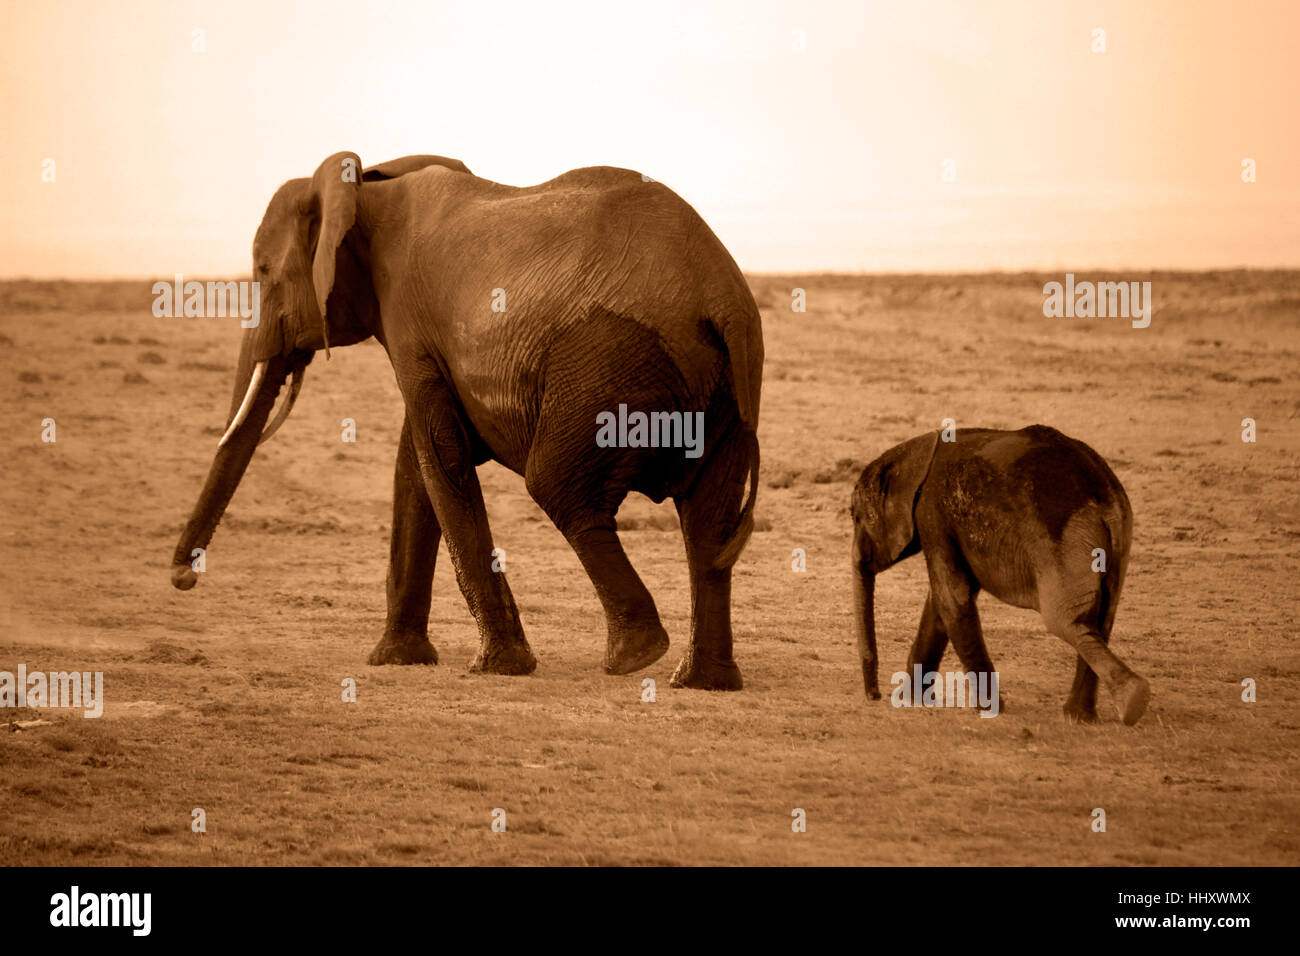 Elephants in Amboseli national park in Kenia Stock Photo - Alamy